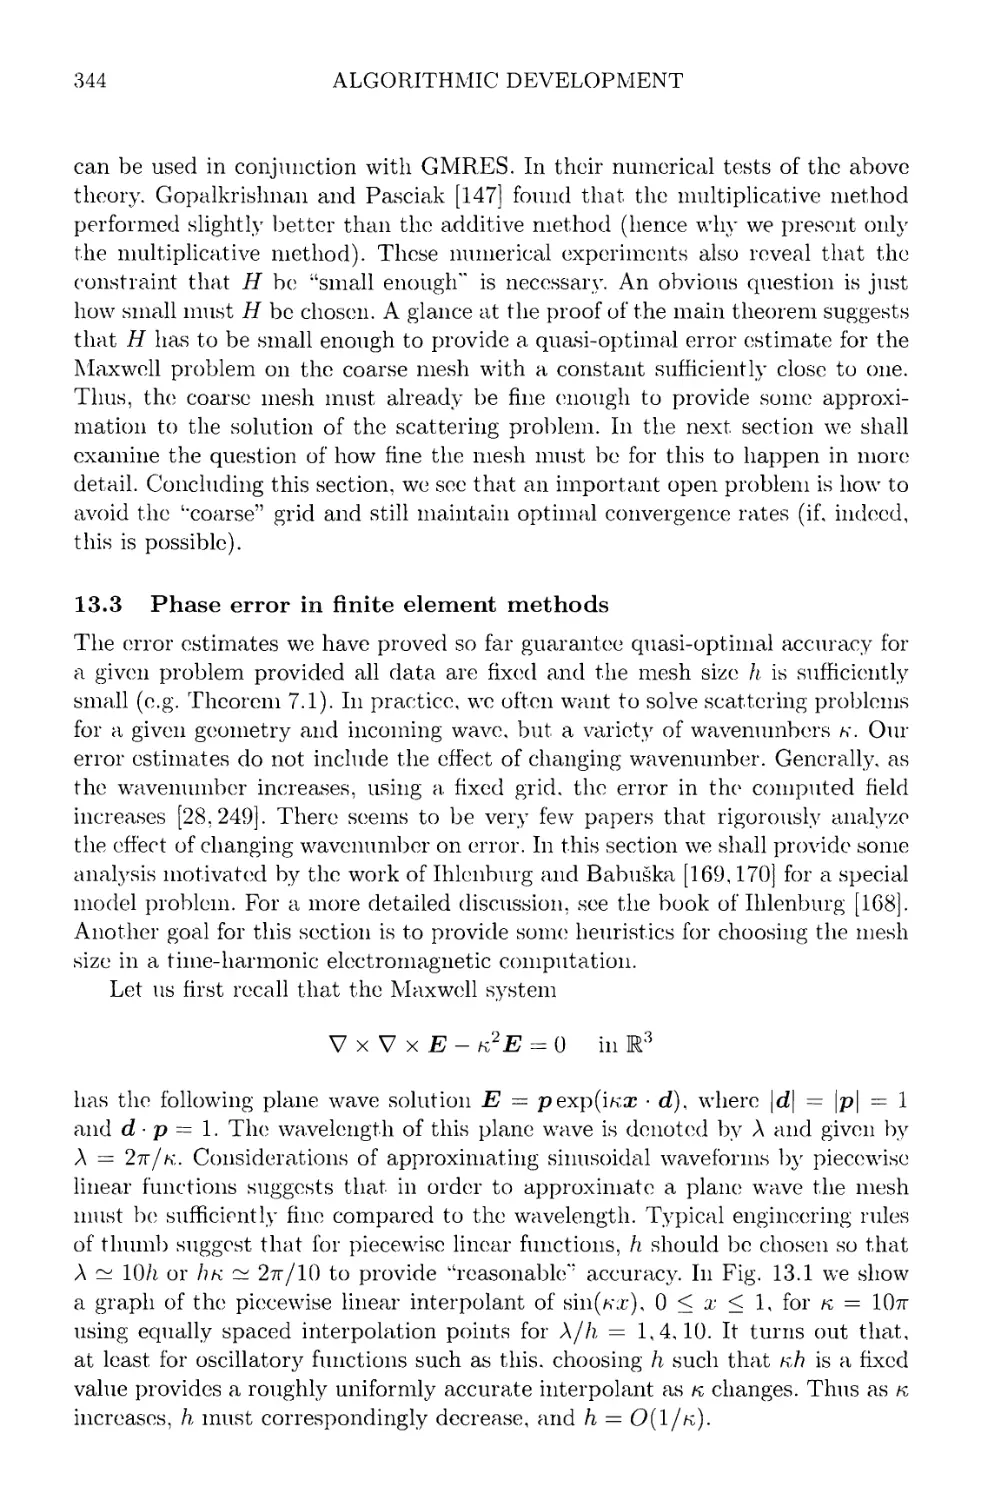 13.3 Phase error in finite element methods